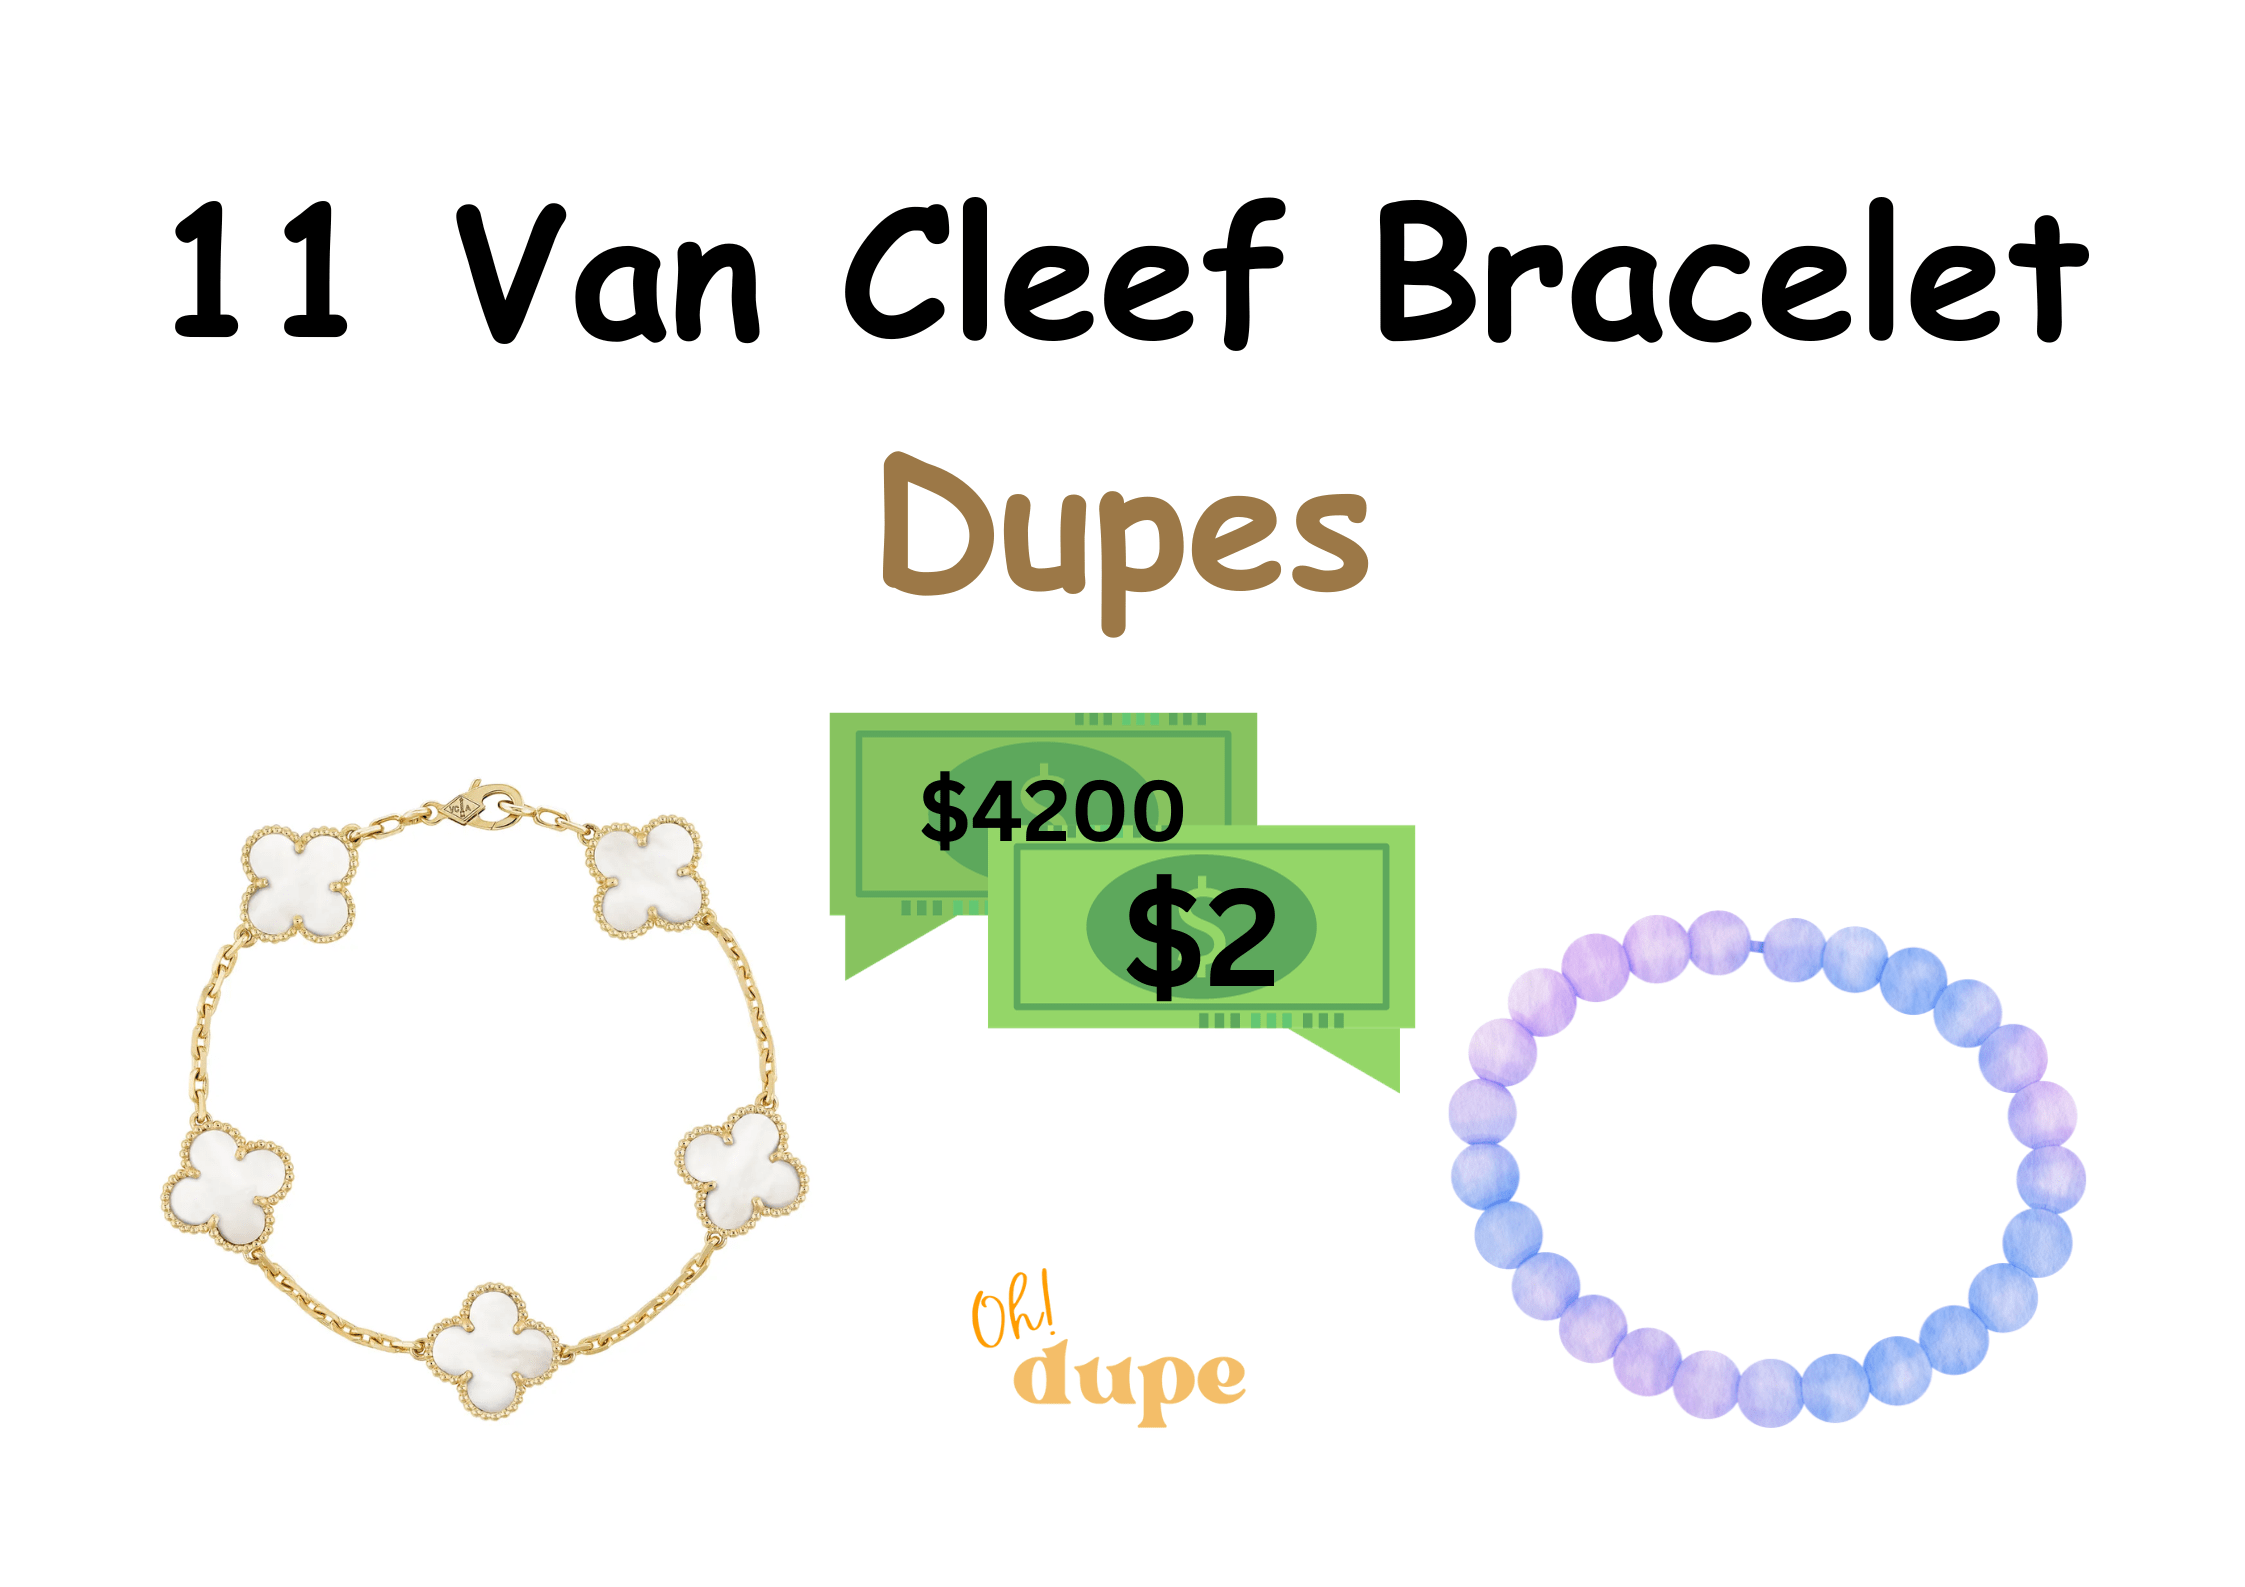 Van Cleef Bracelet Dupe